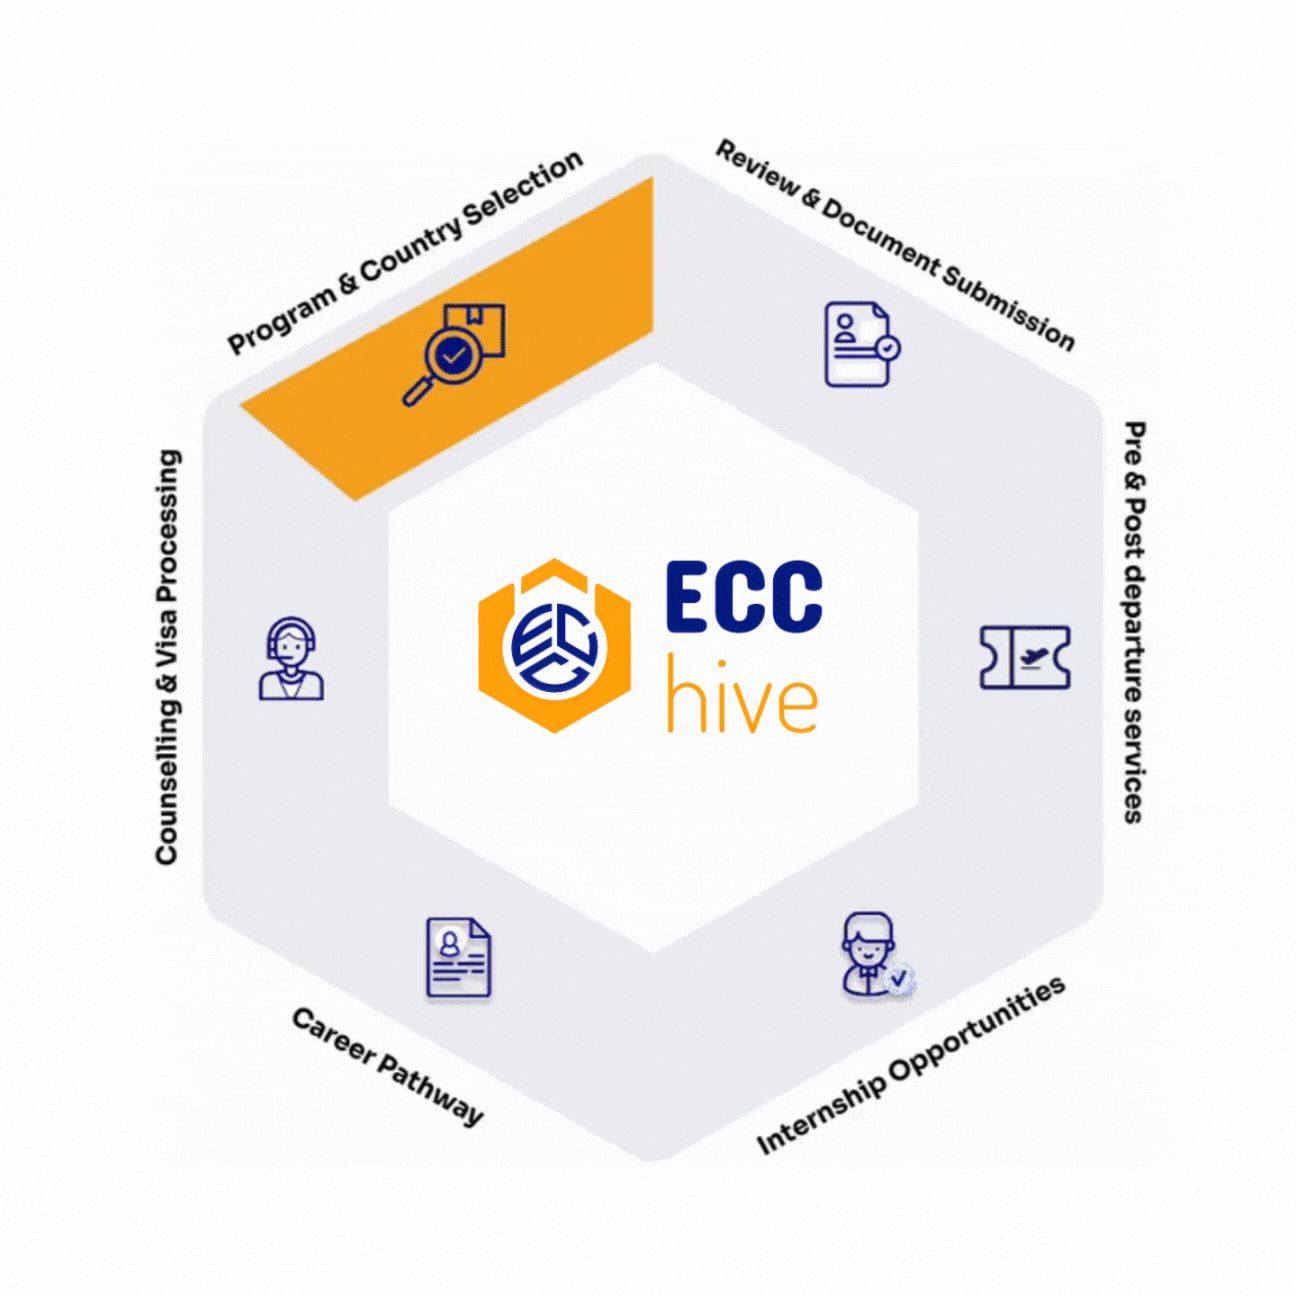 ECC HIve Services